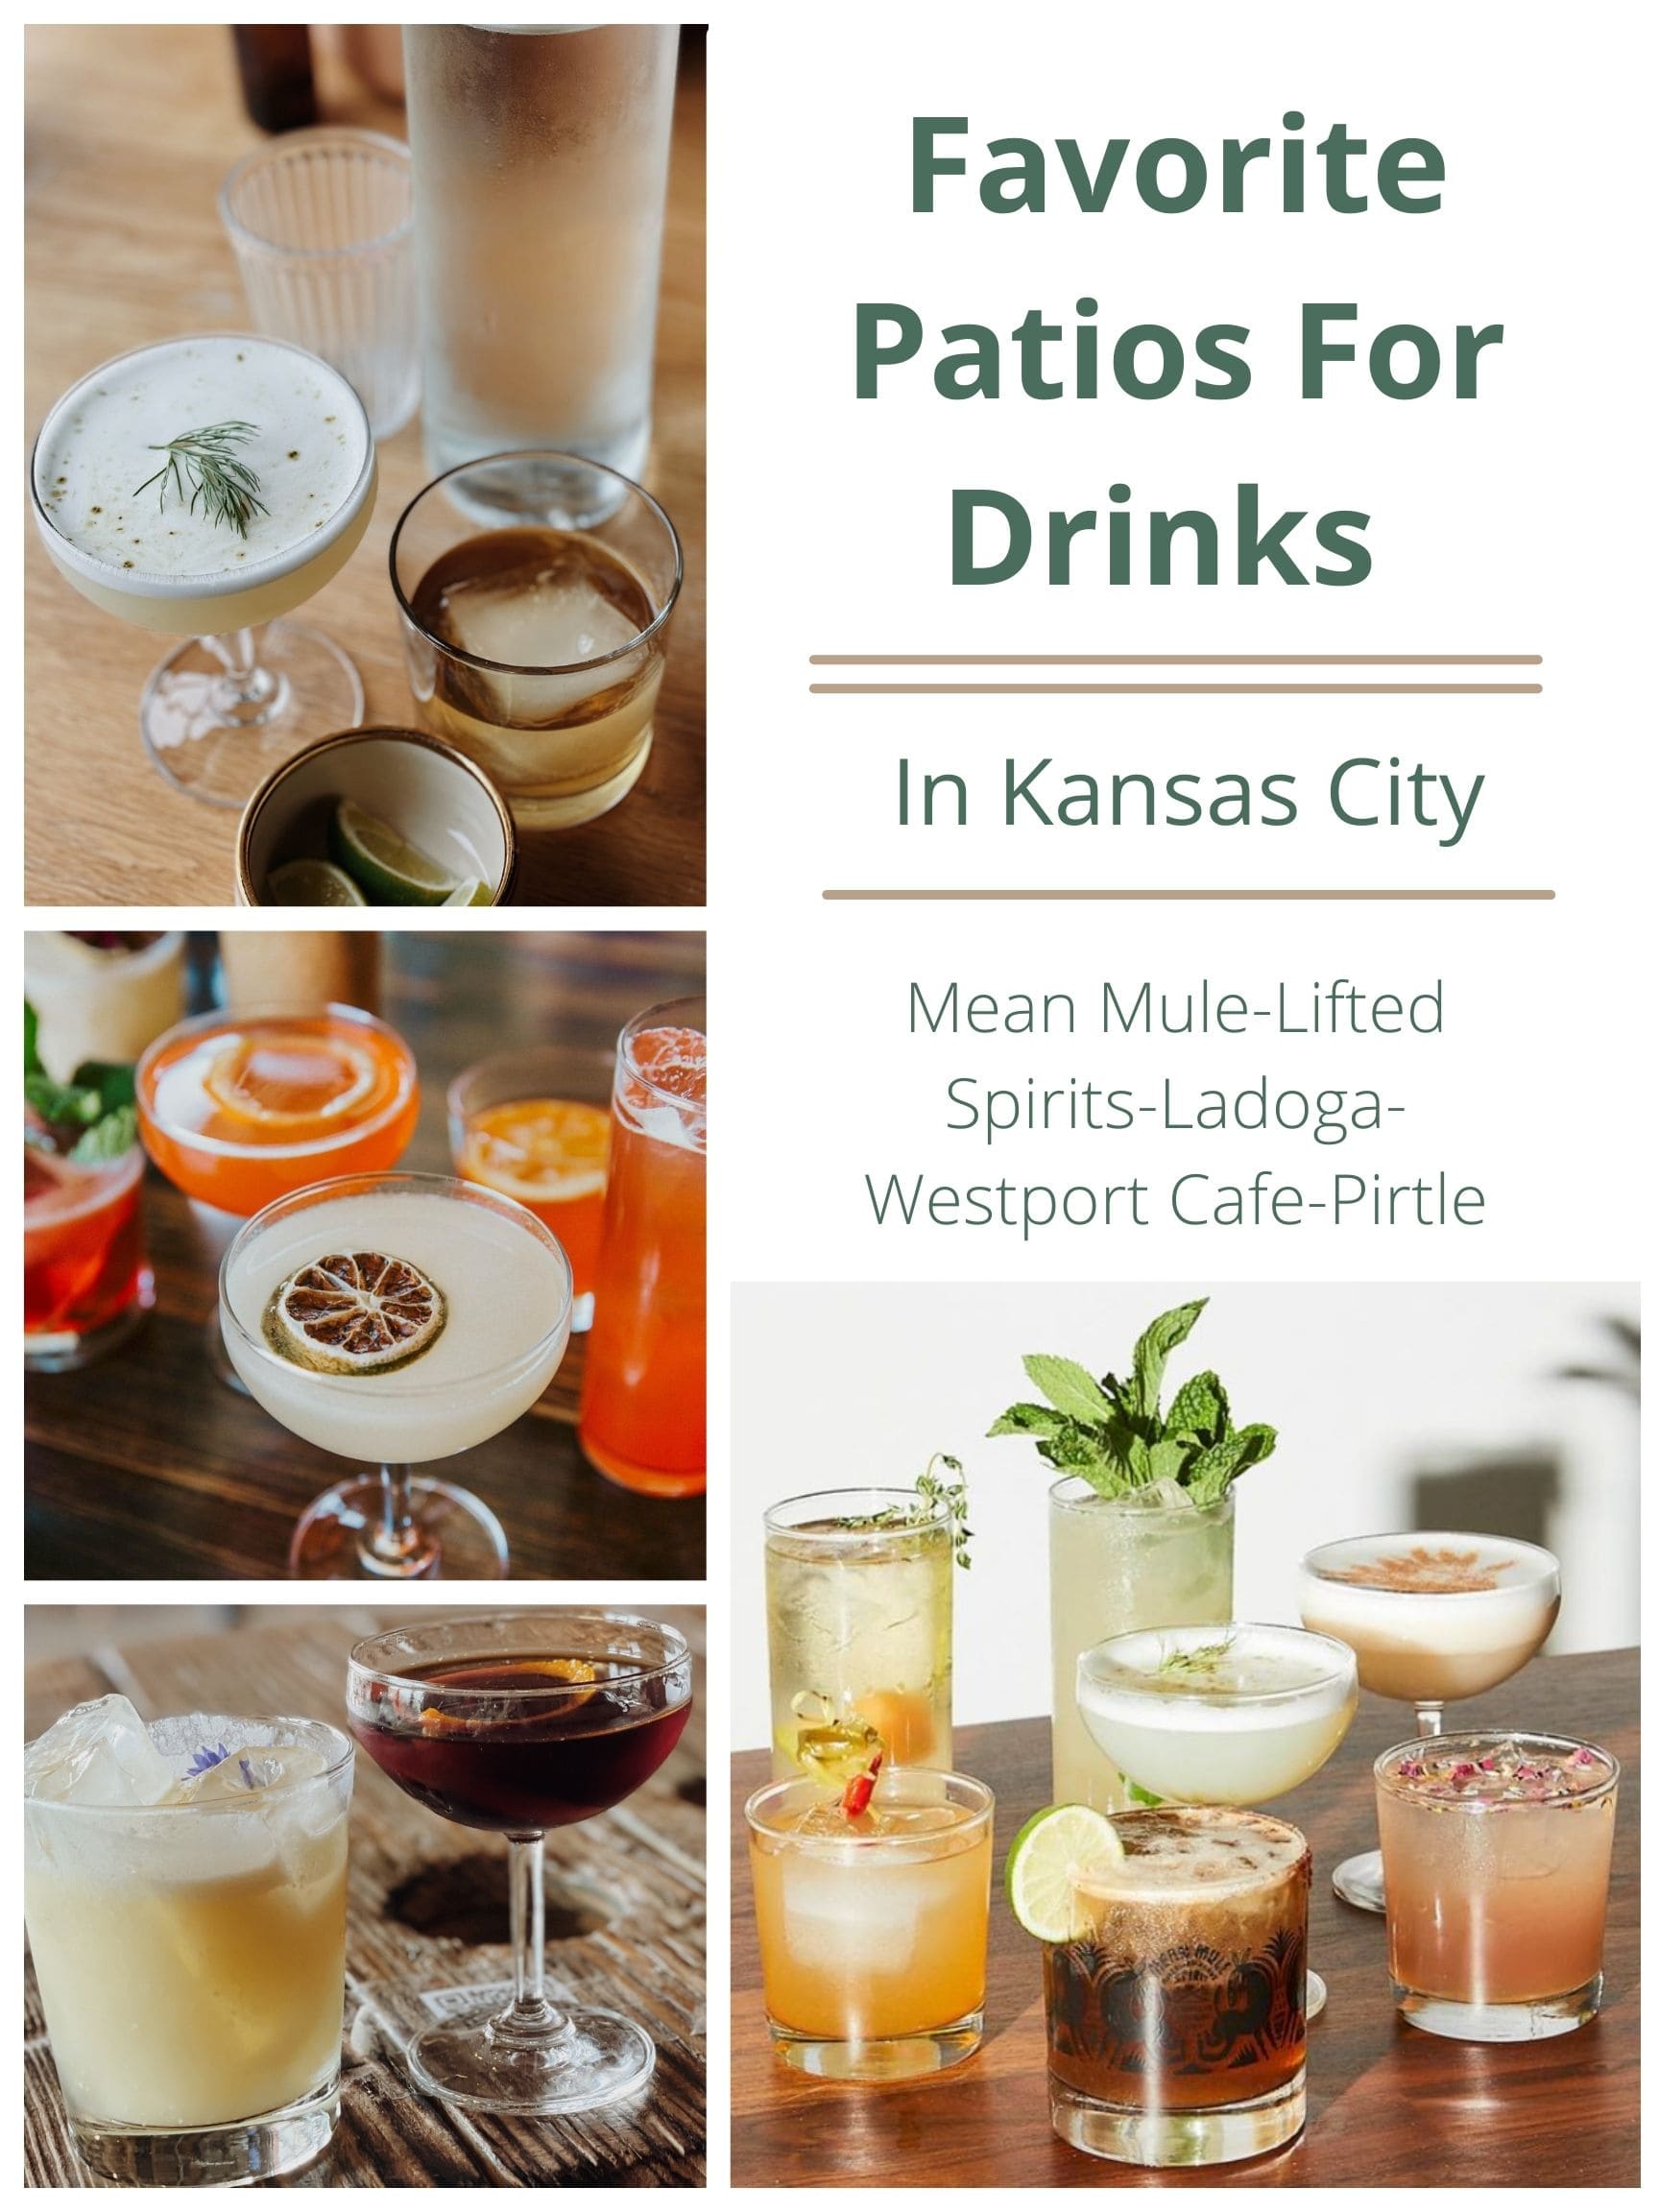 Favorite Patios for Drinks in KC